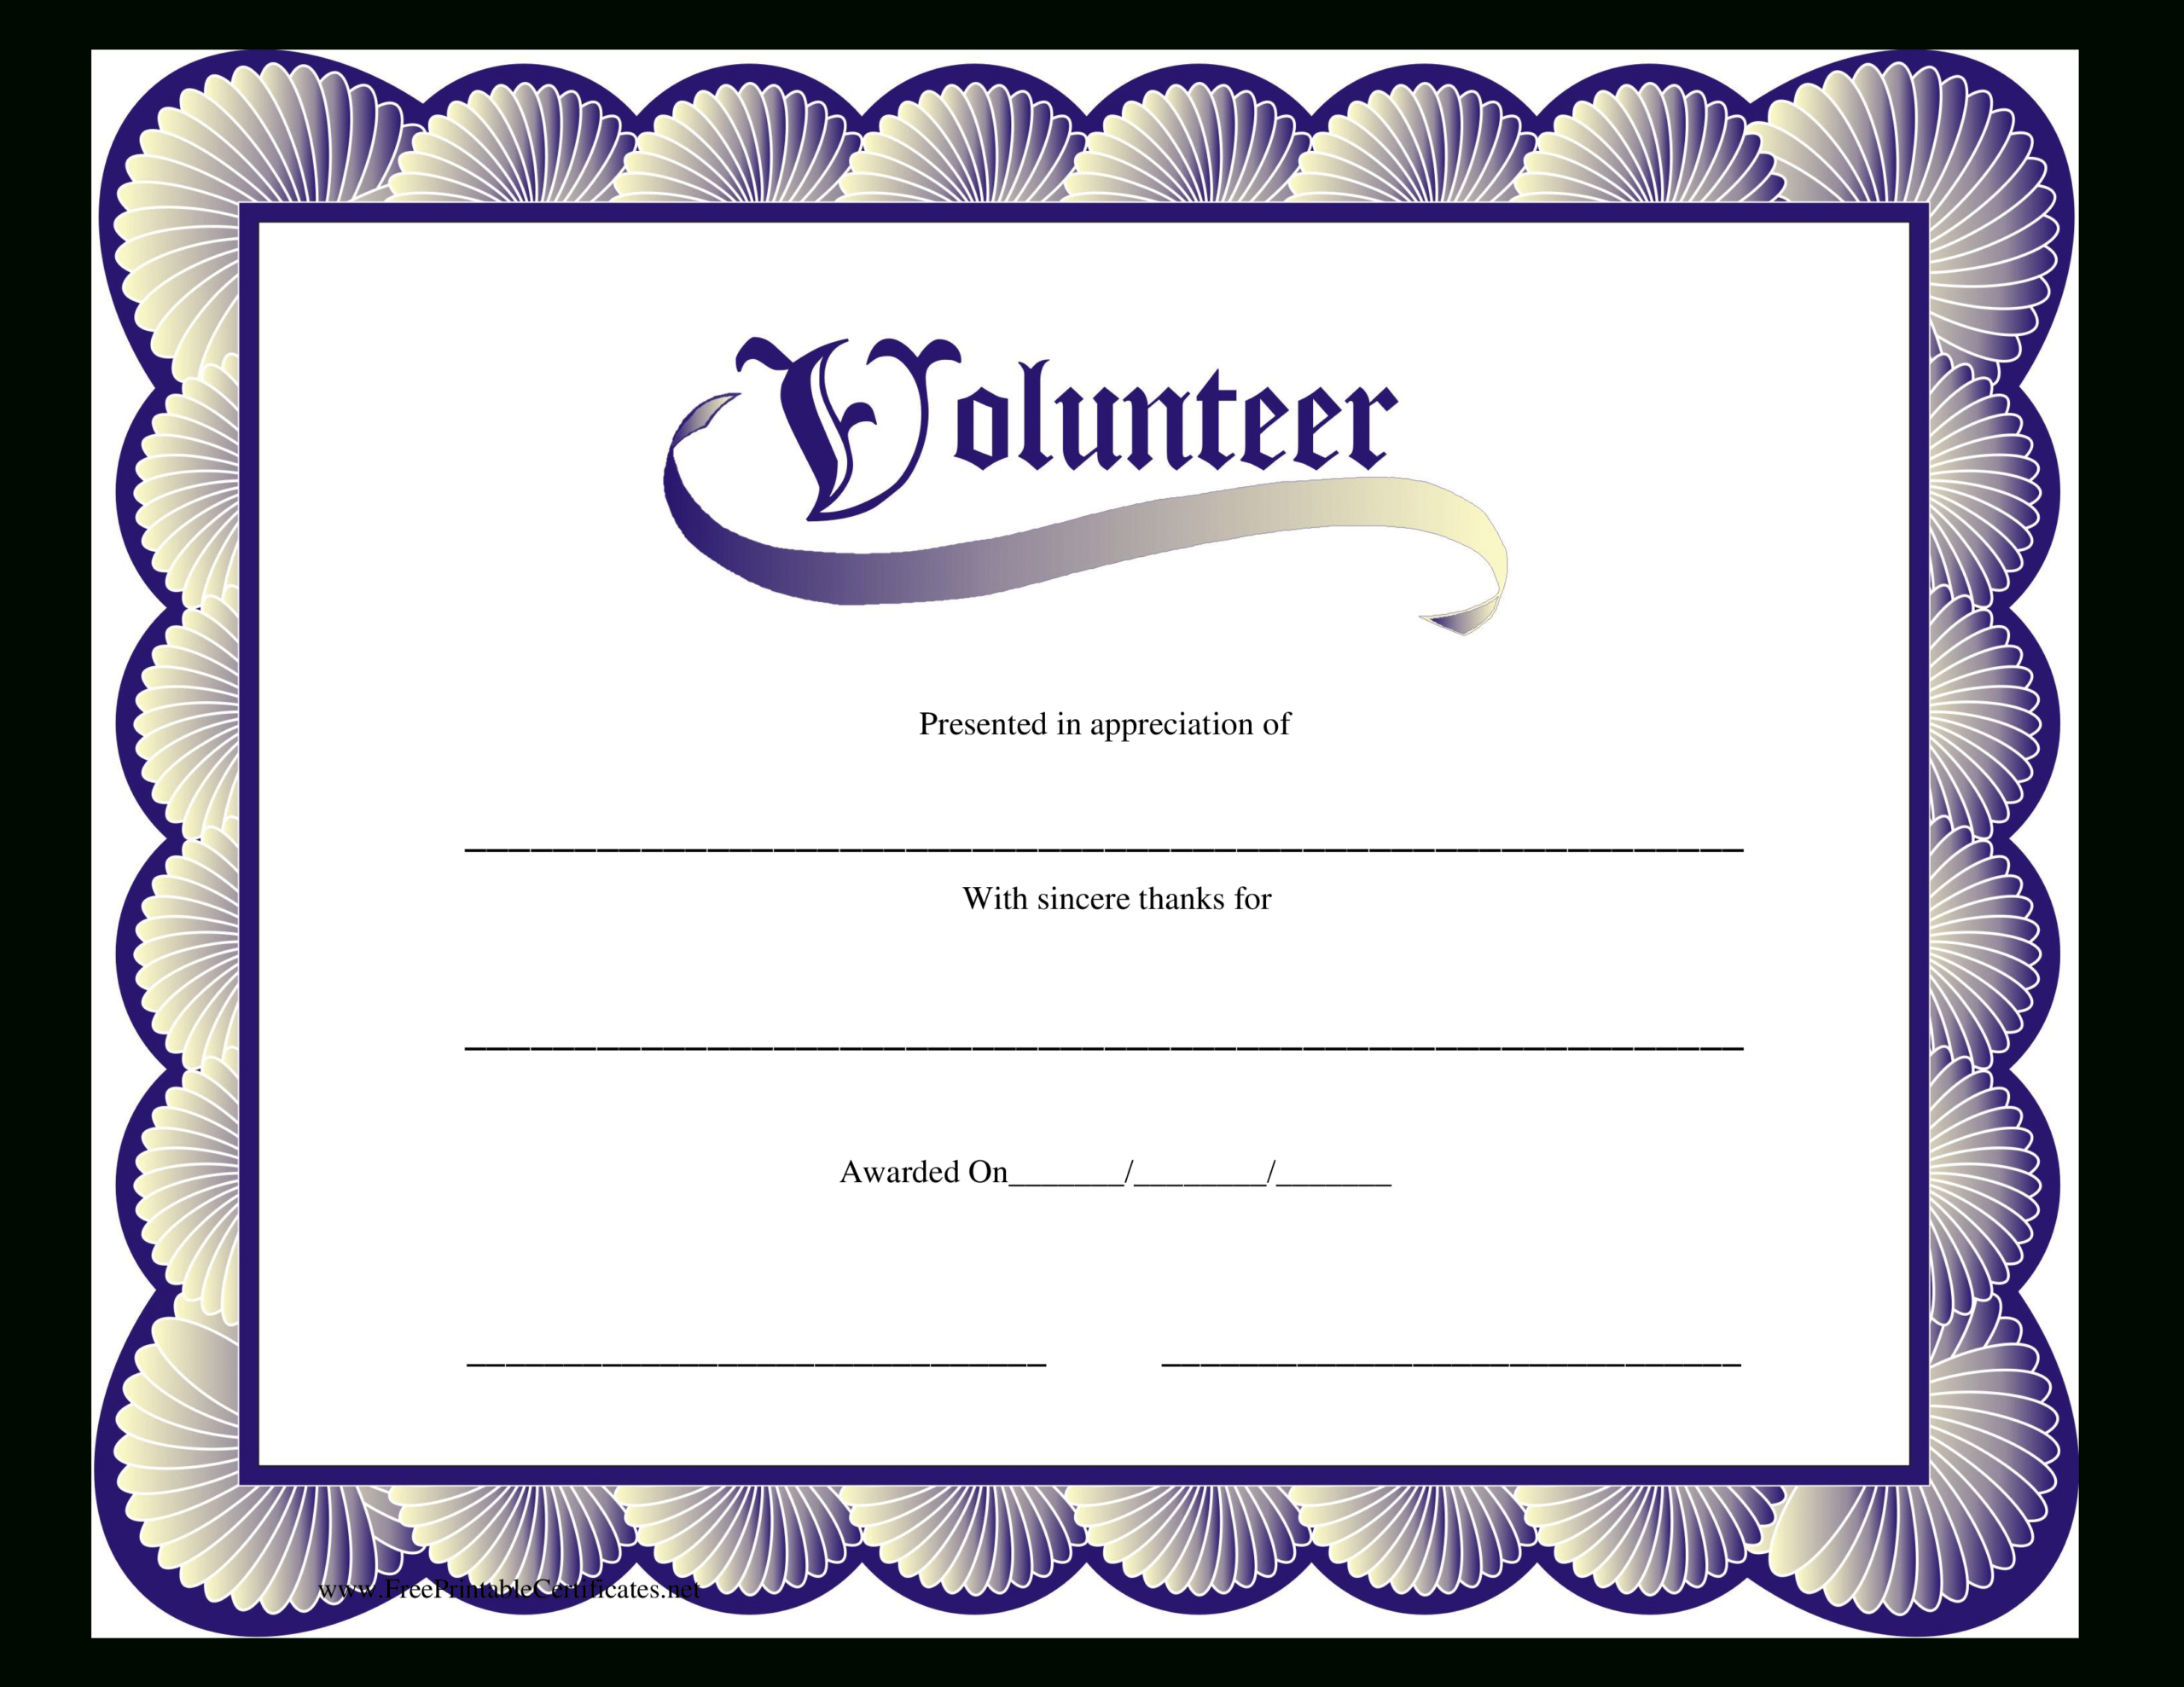 Volunteer Certificate | Templates At Allbusinesstemplates With Volunteer Certificate Templates